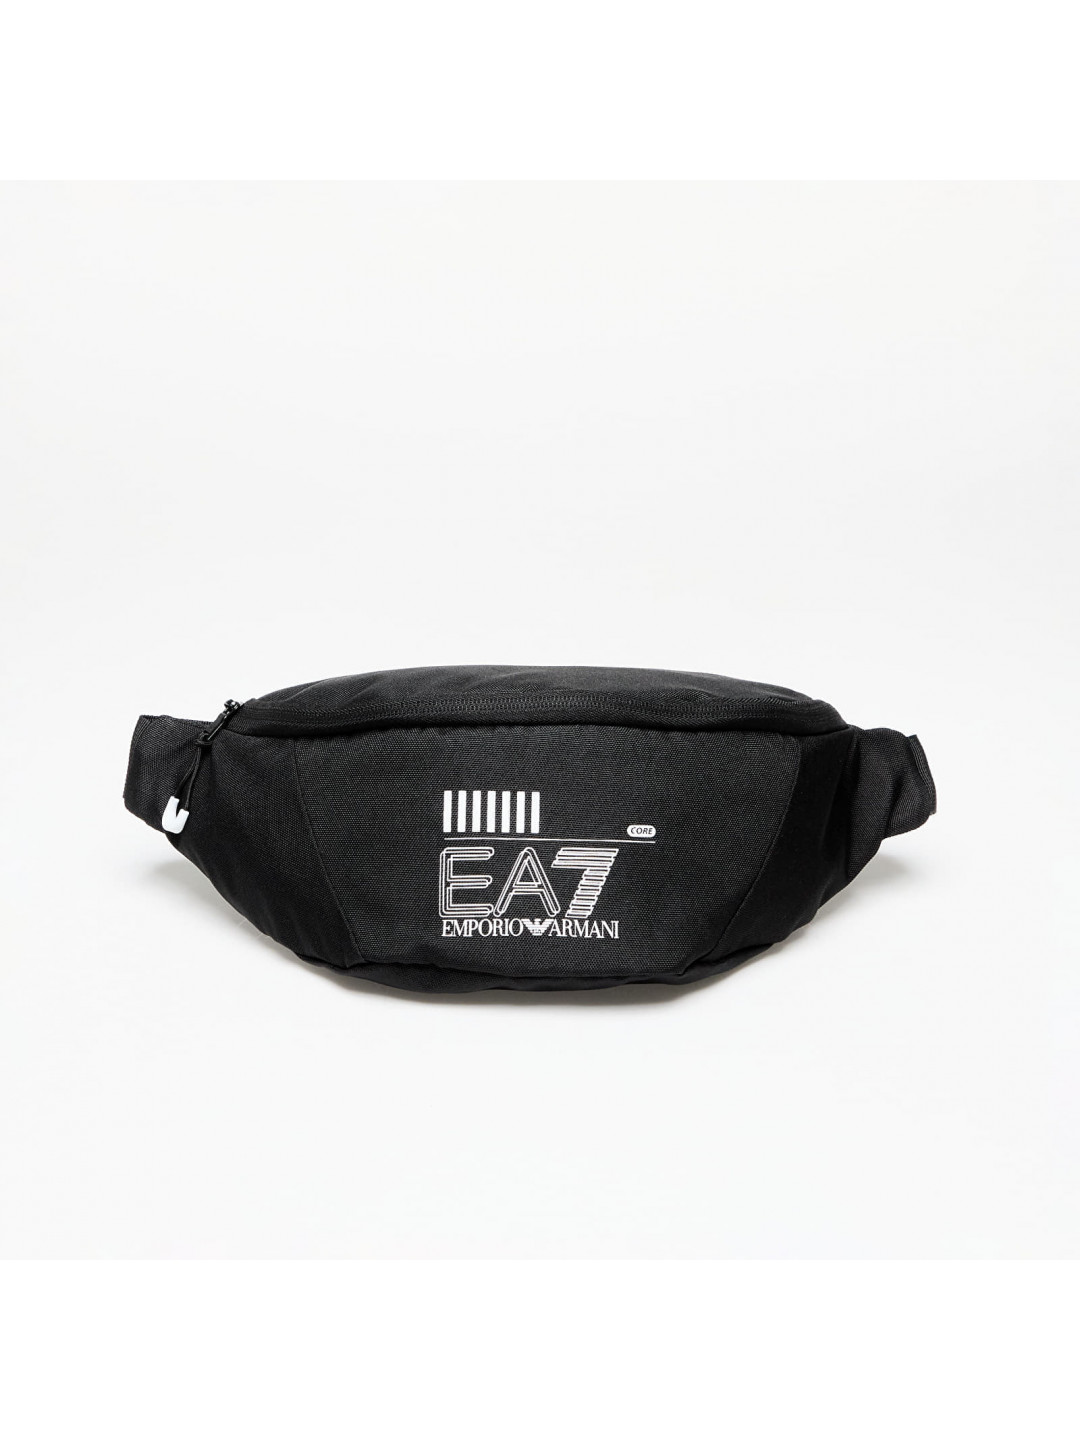 EA7 Emporio Armani Unisex Sling Bag Black White Logo